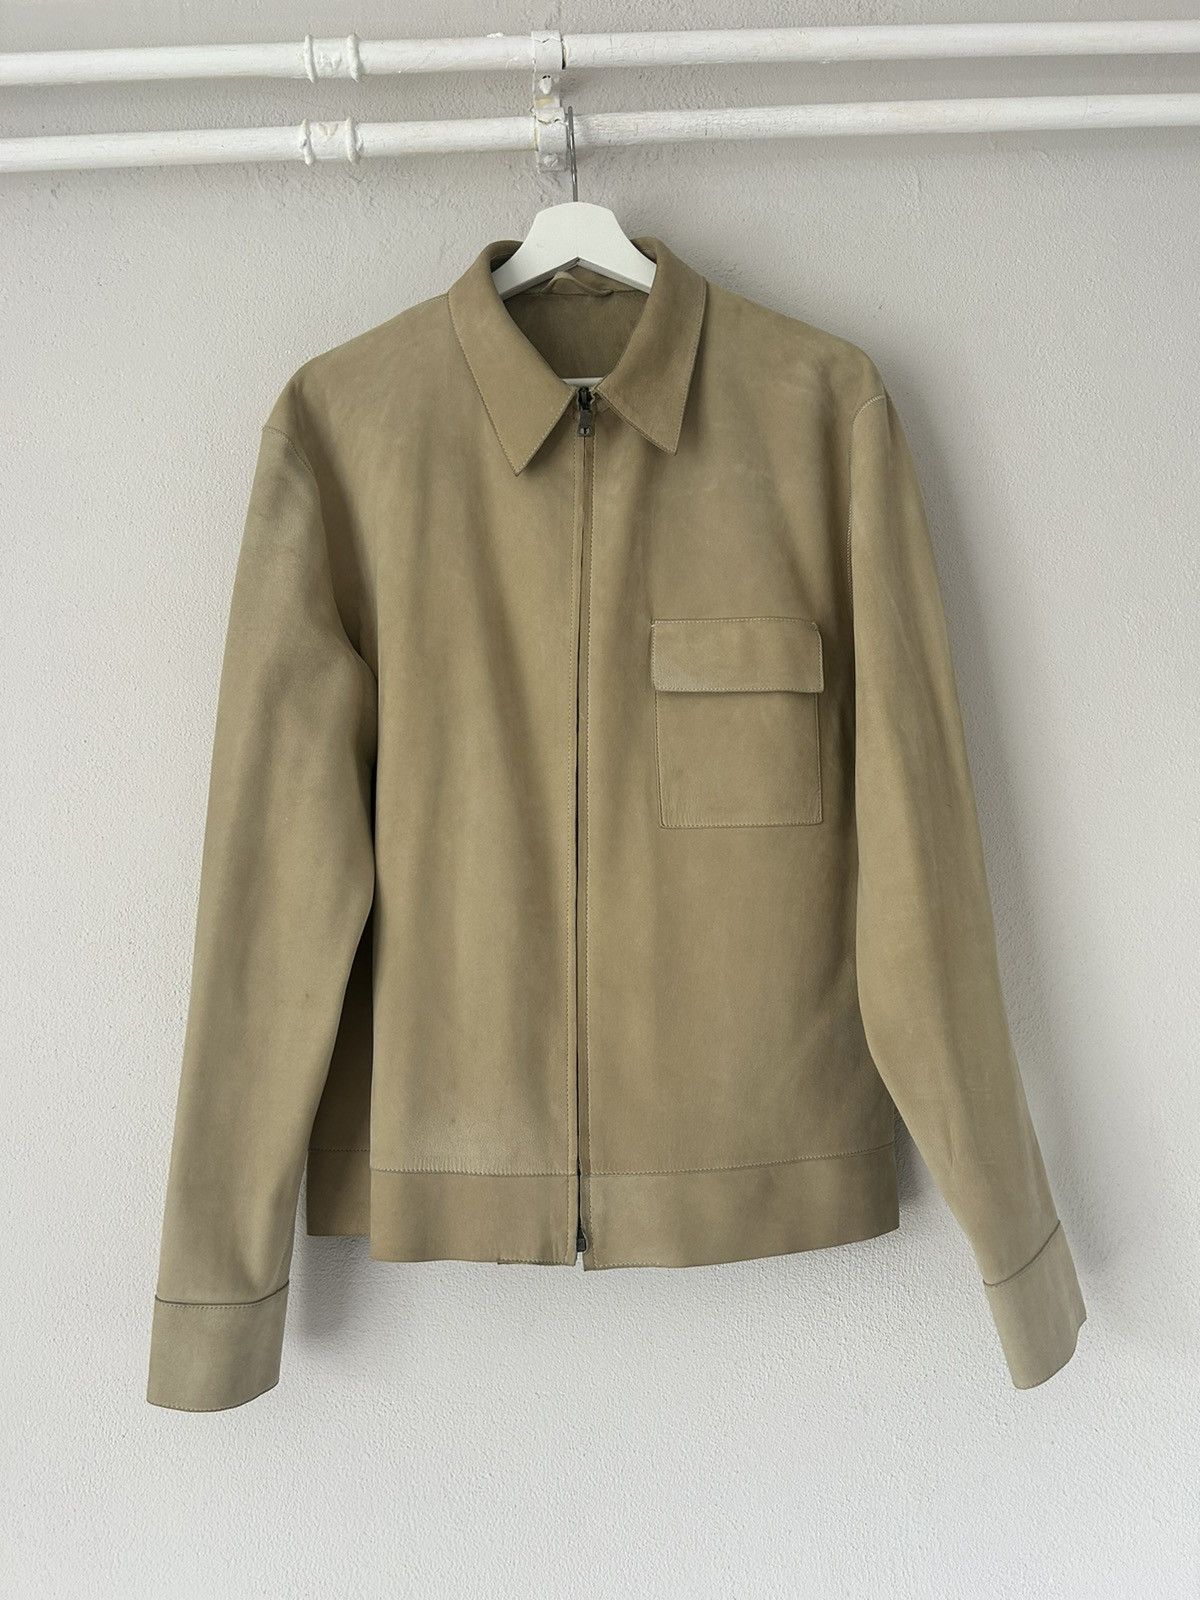 Pre-owned Jil Sander Cream Suede Leather Jacket